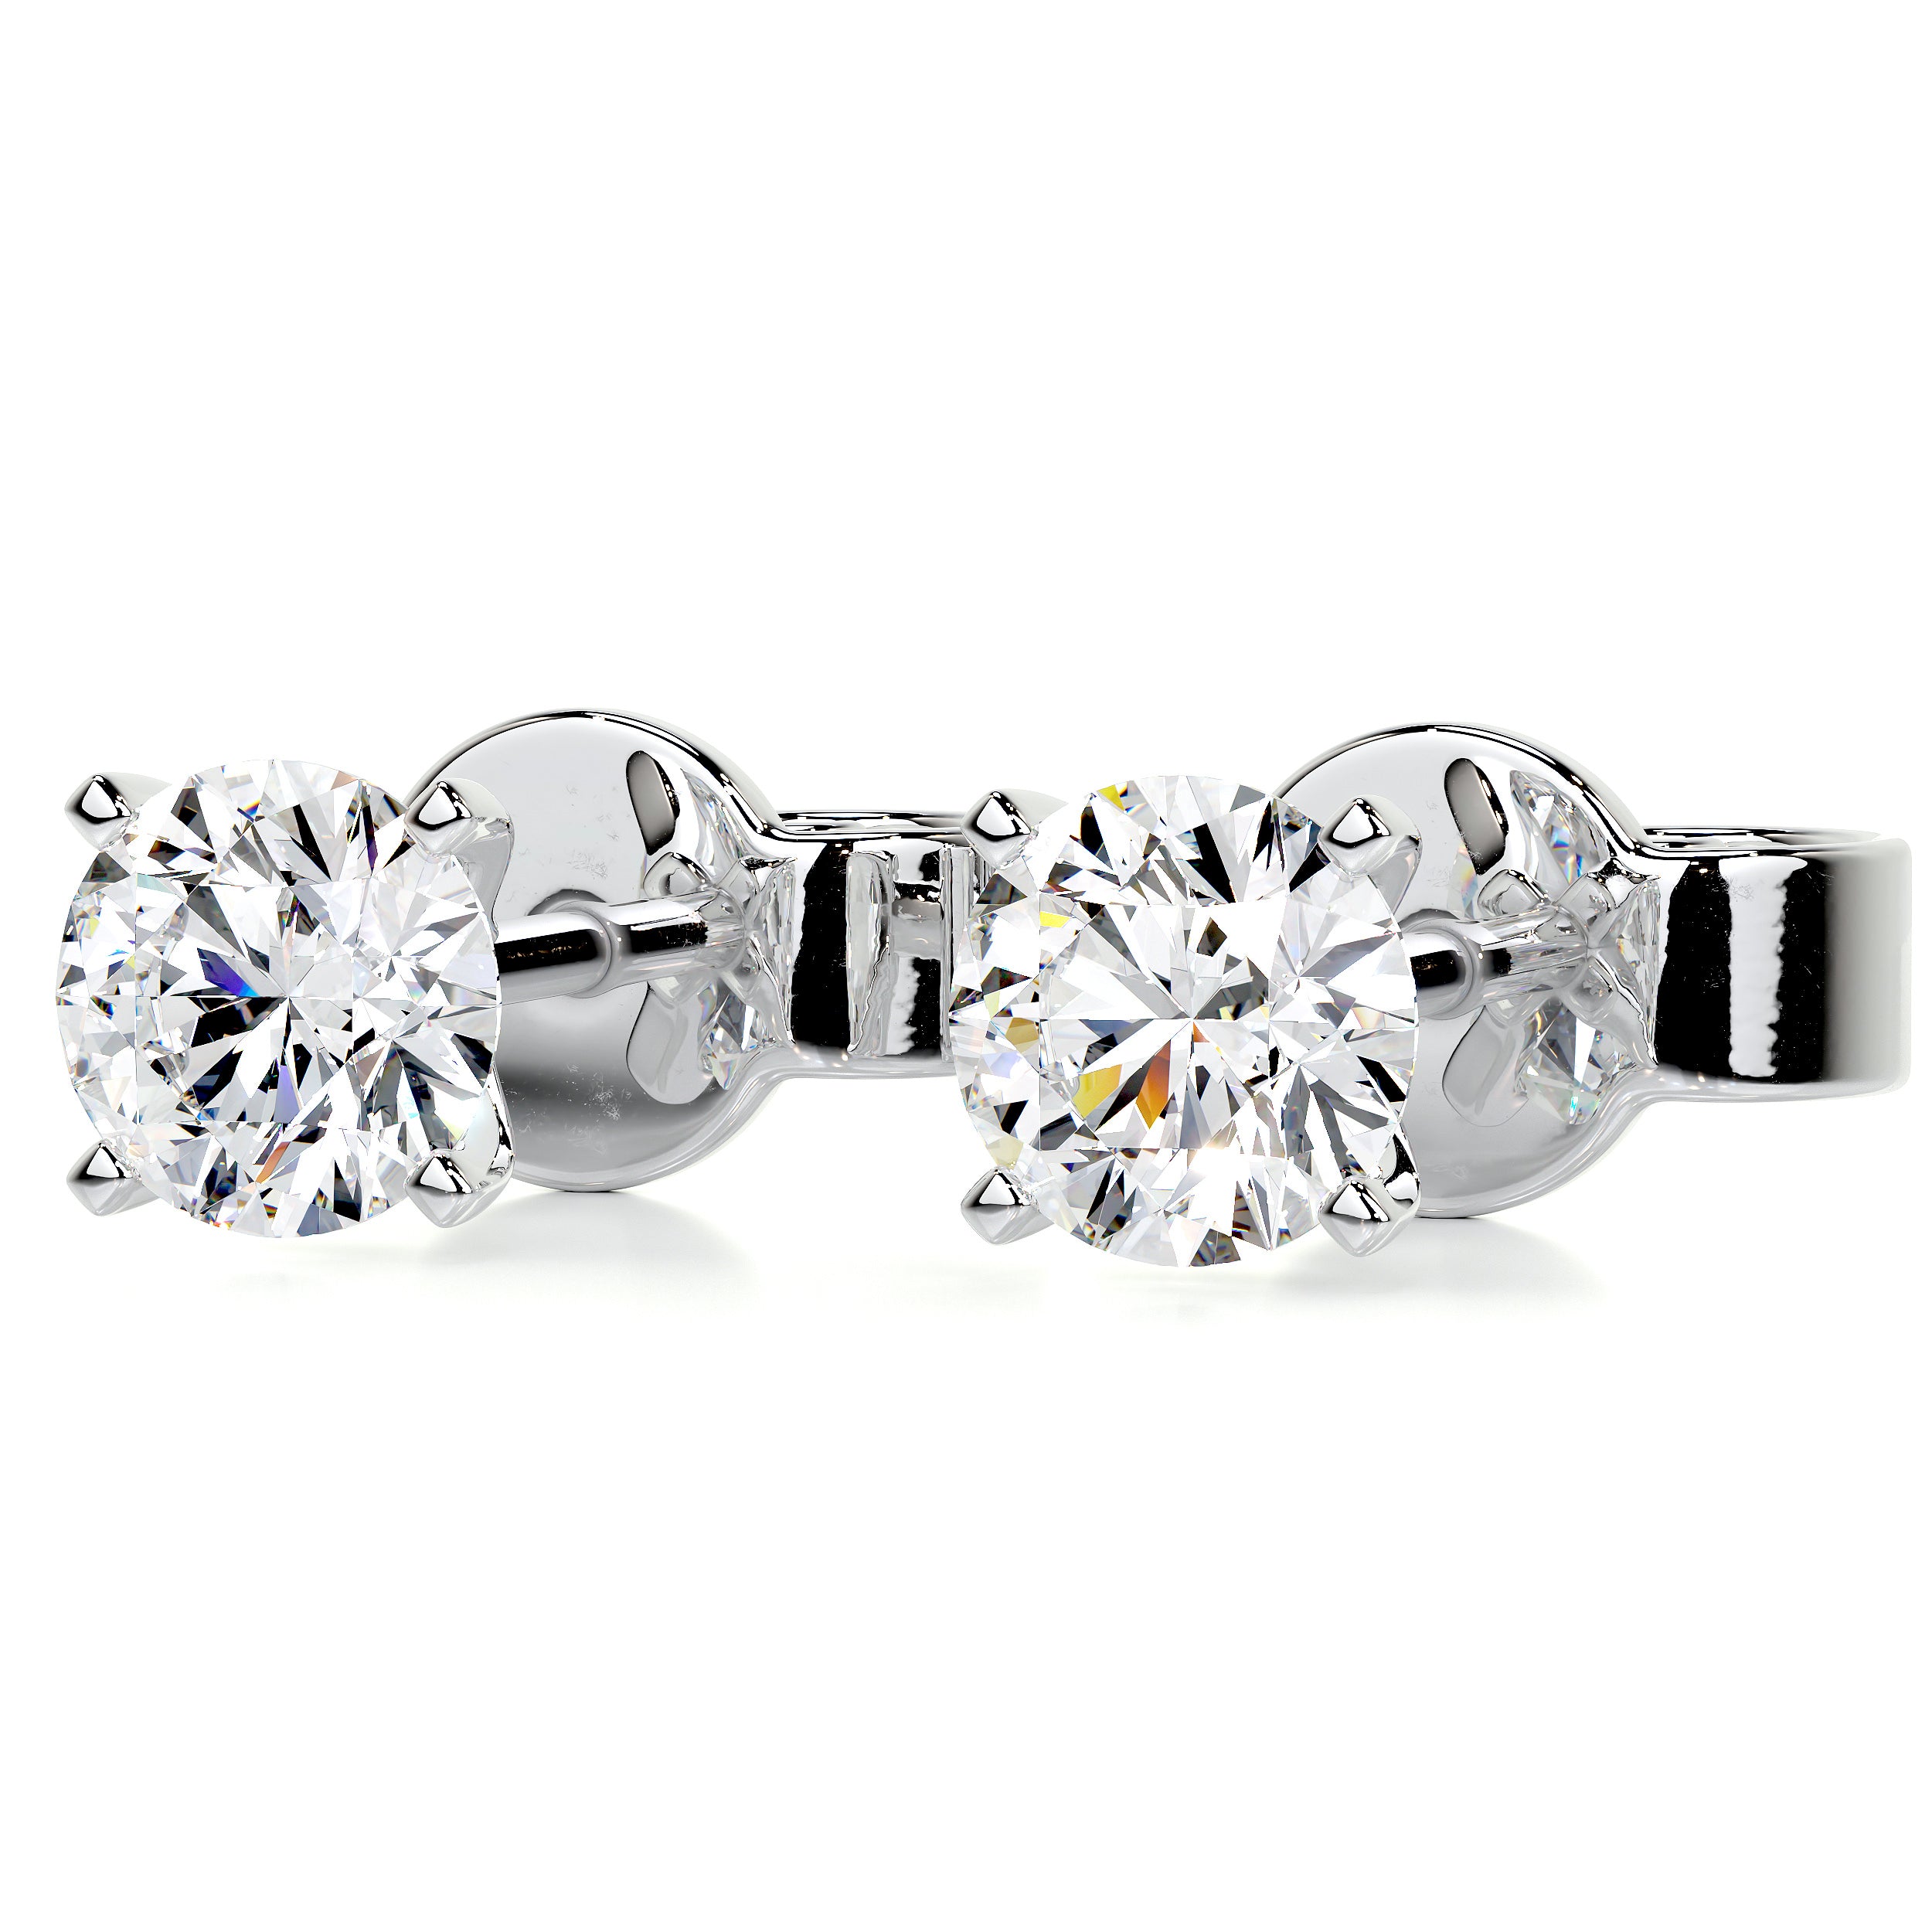 Allen Lab Grown Diamond Earrings   (2 Carat) -14K White Gold